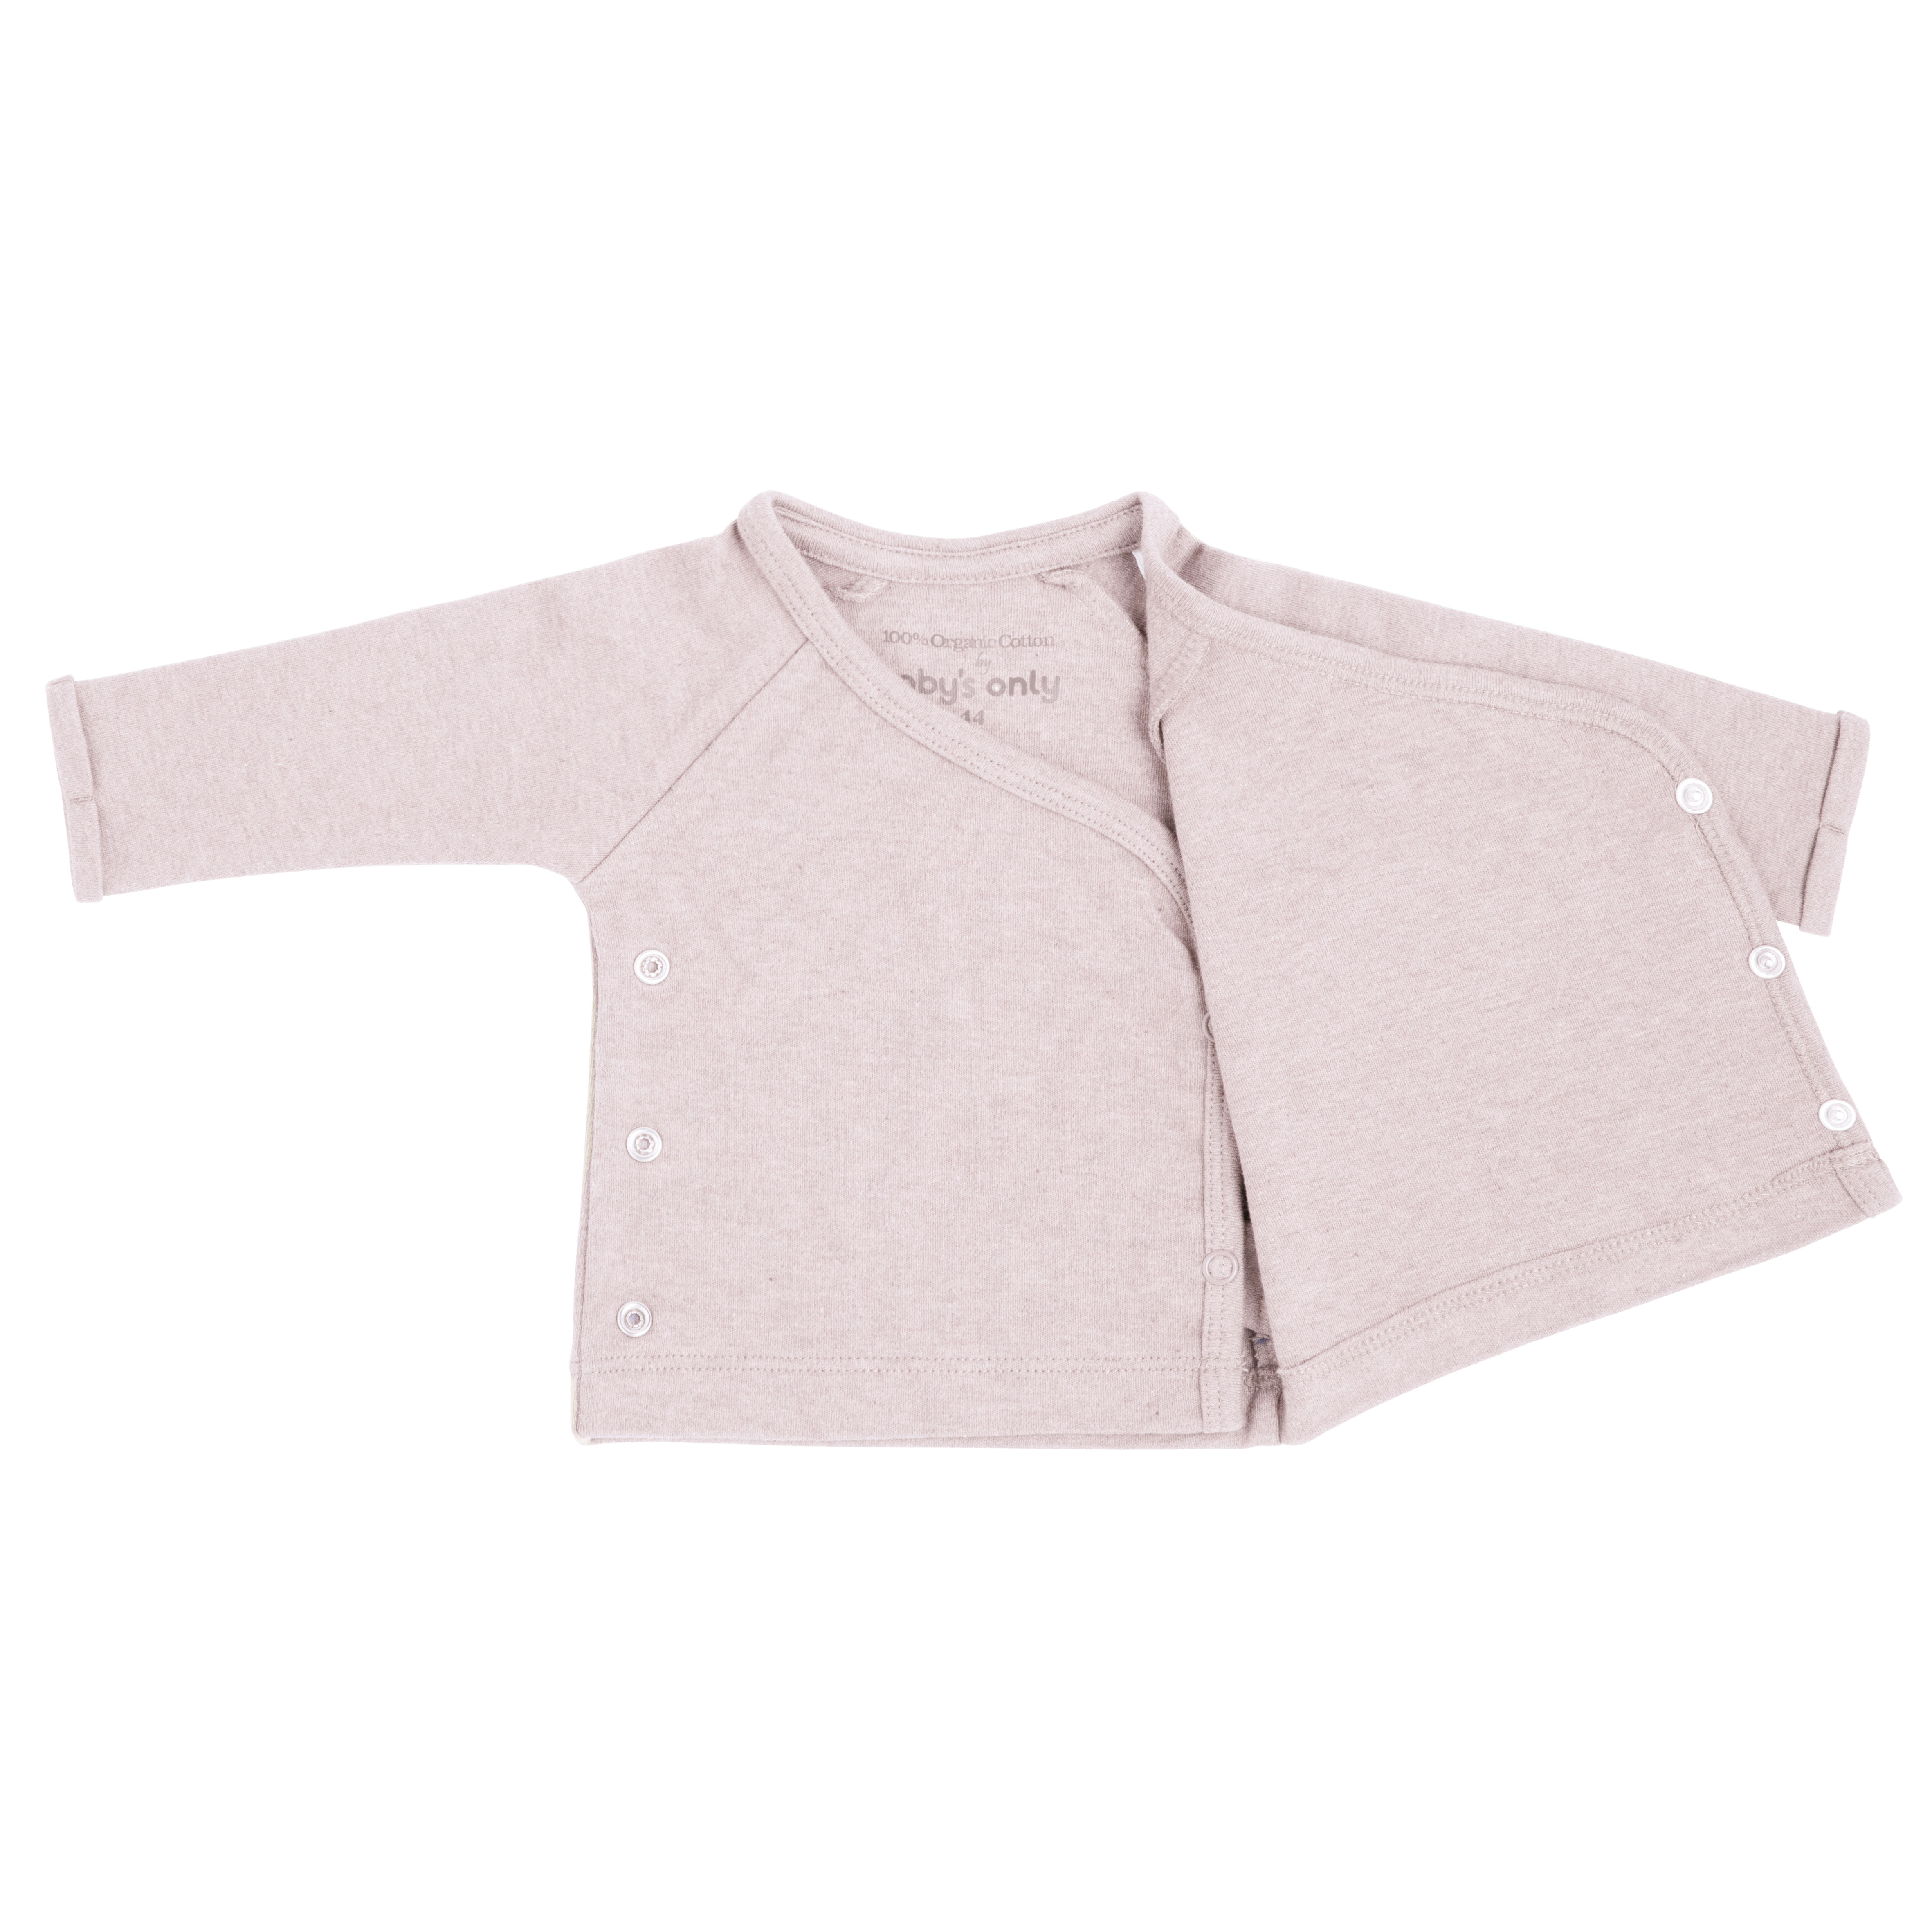 Wrap sweater Melange classic pink - 44